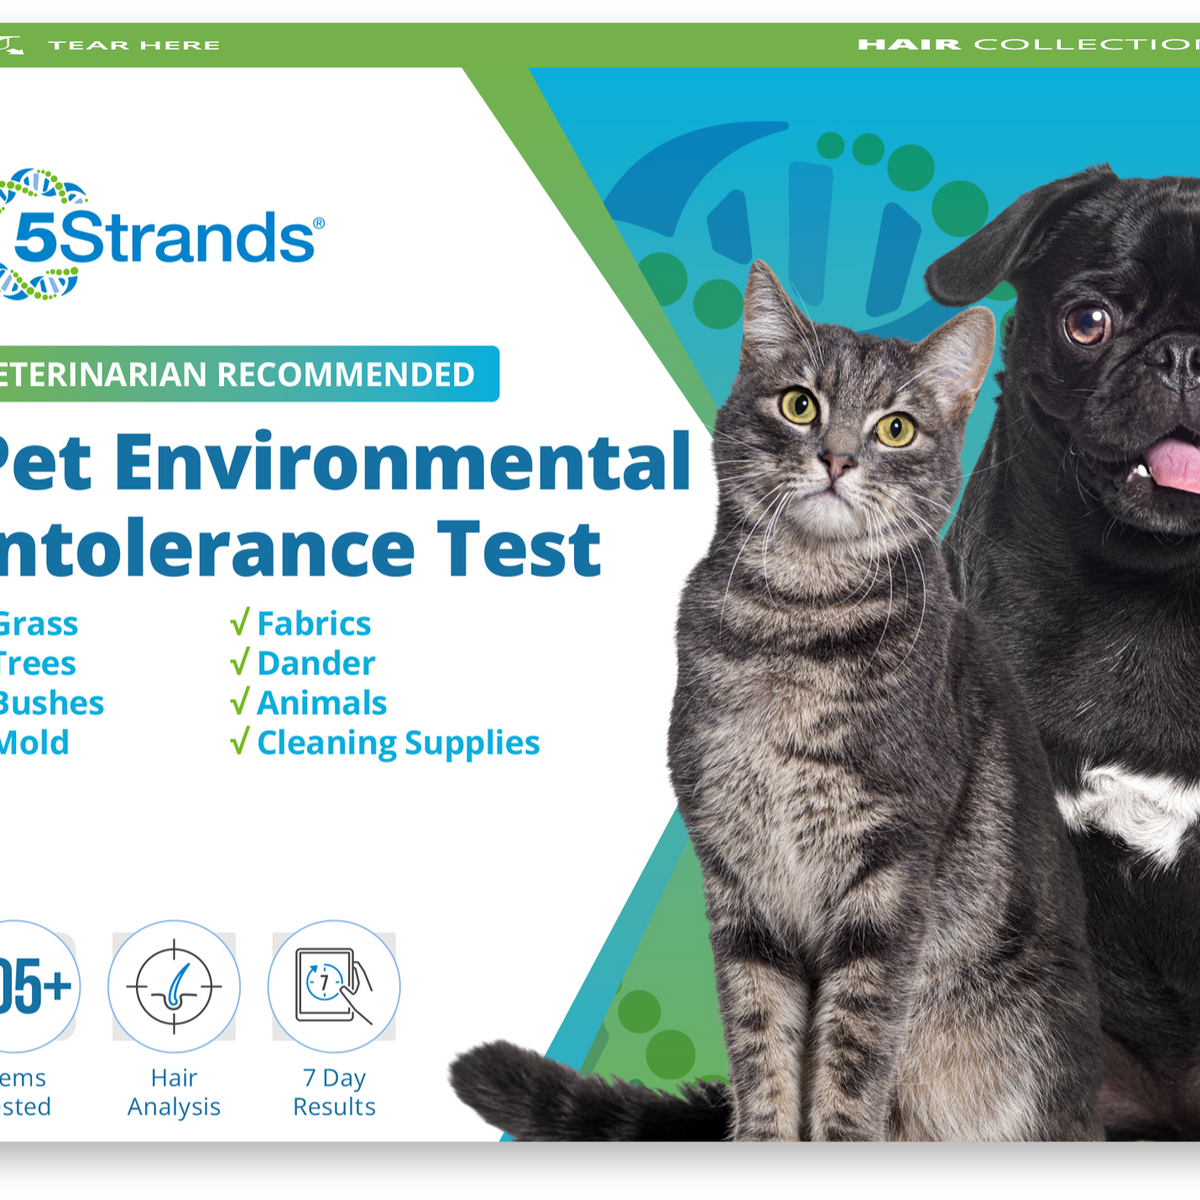 Pet Environmental Intolerance Test